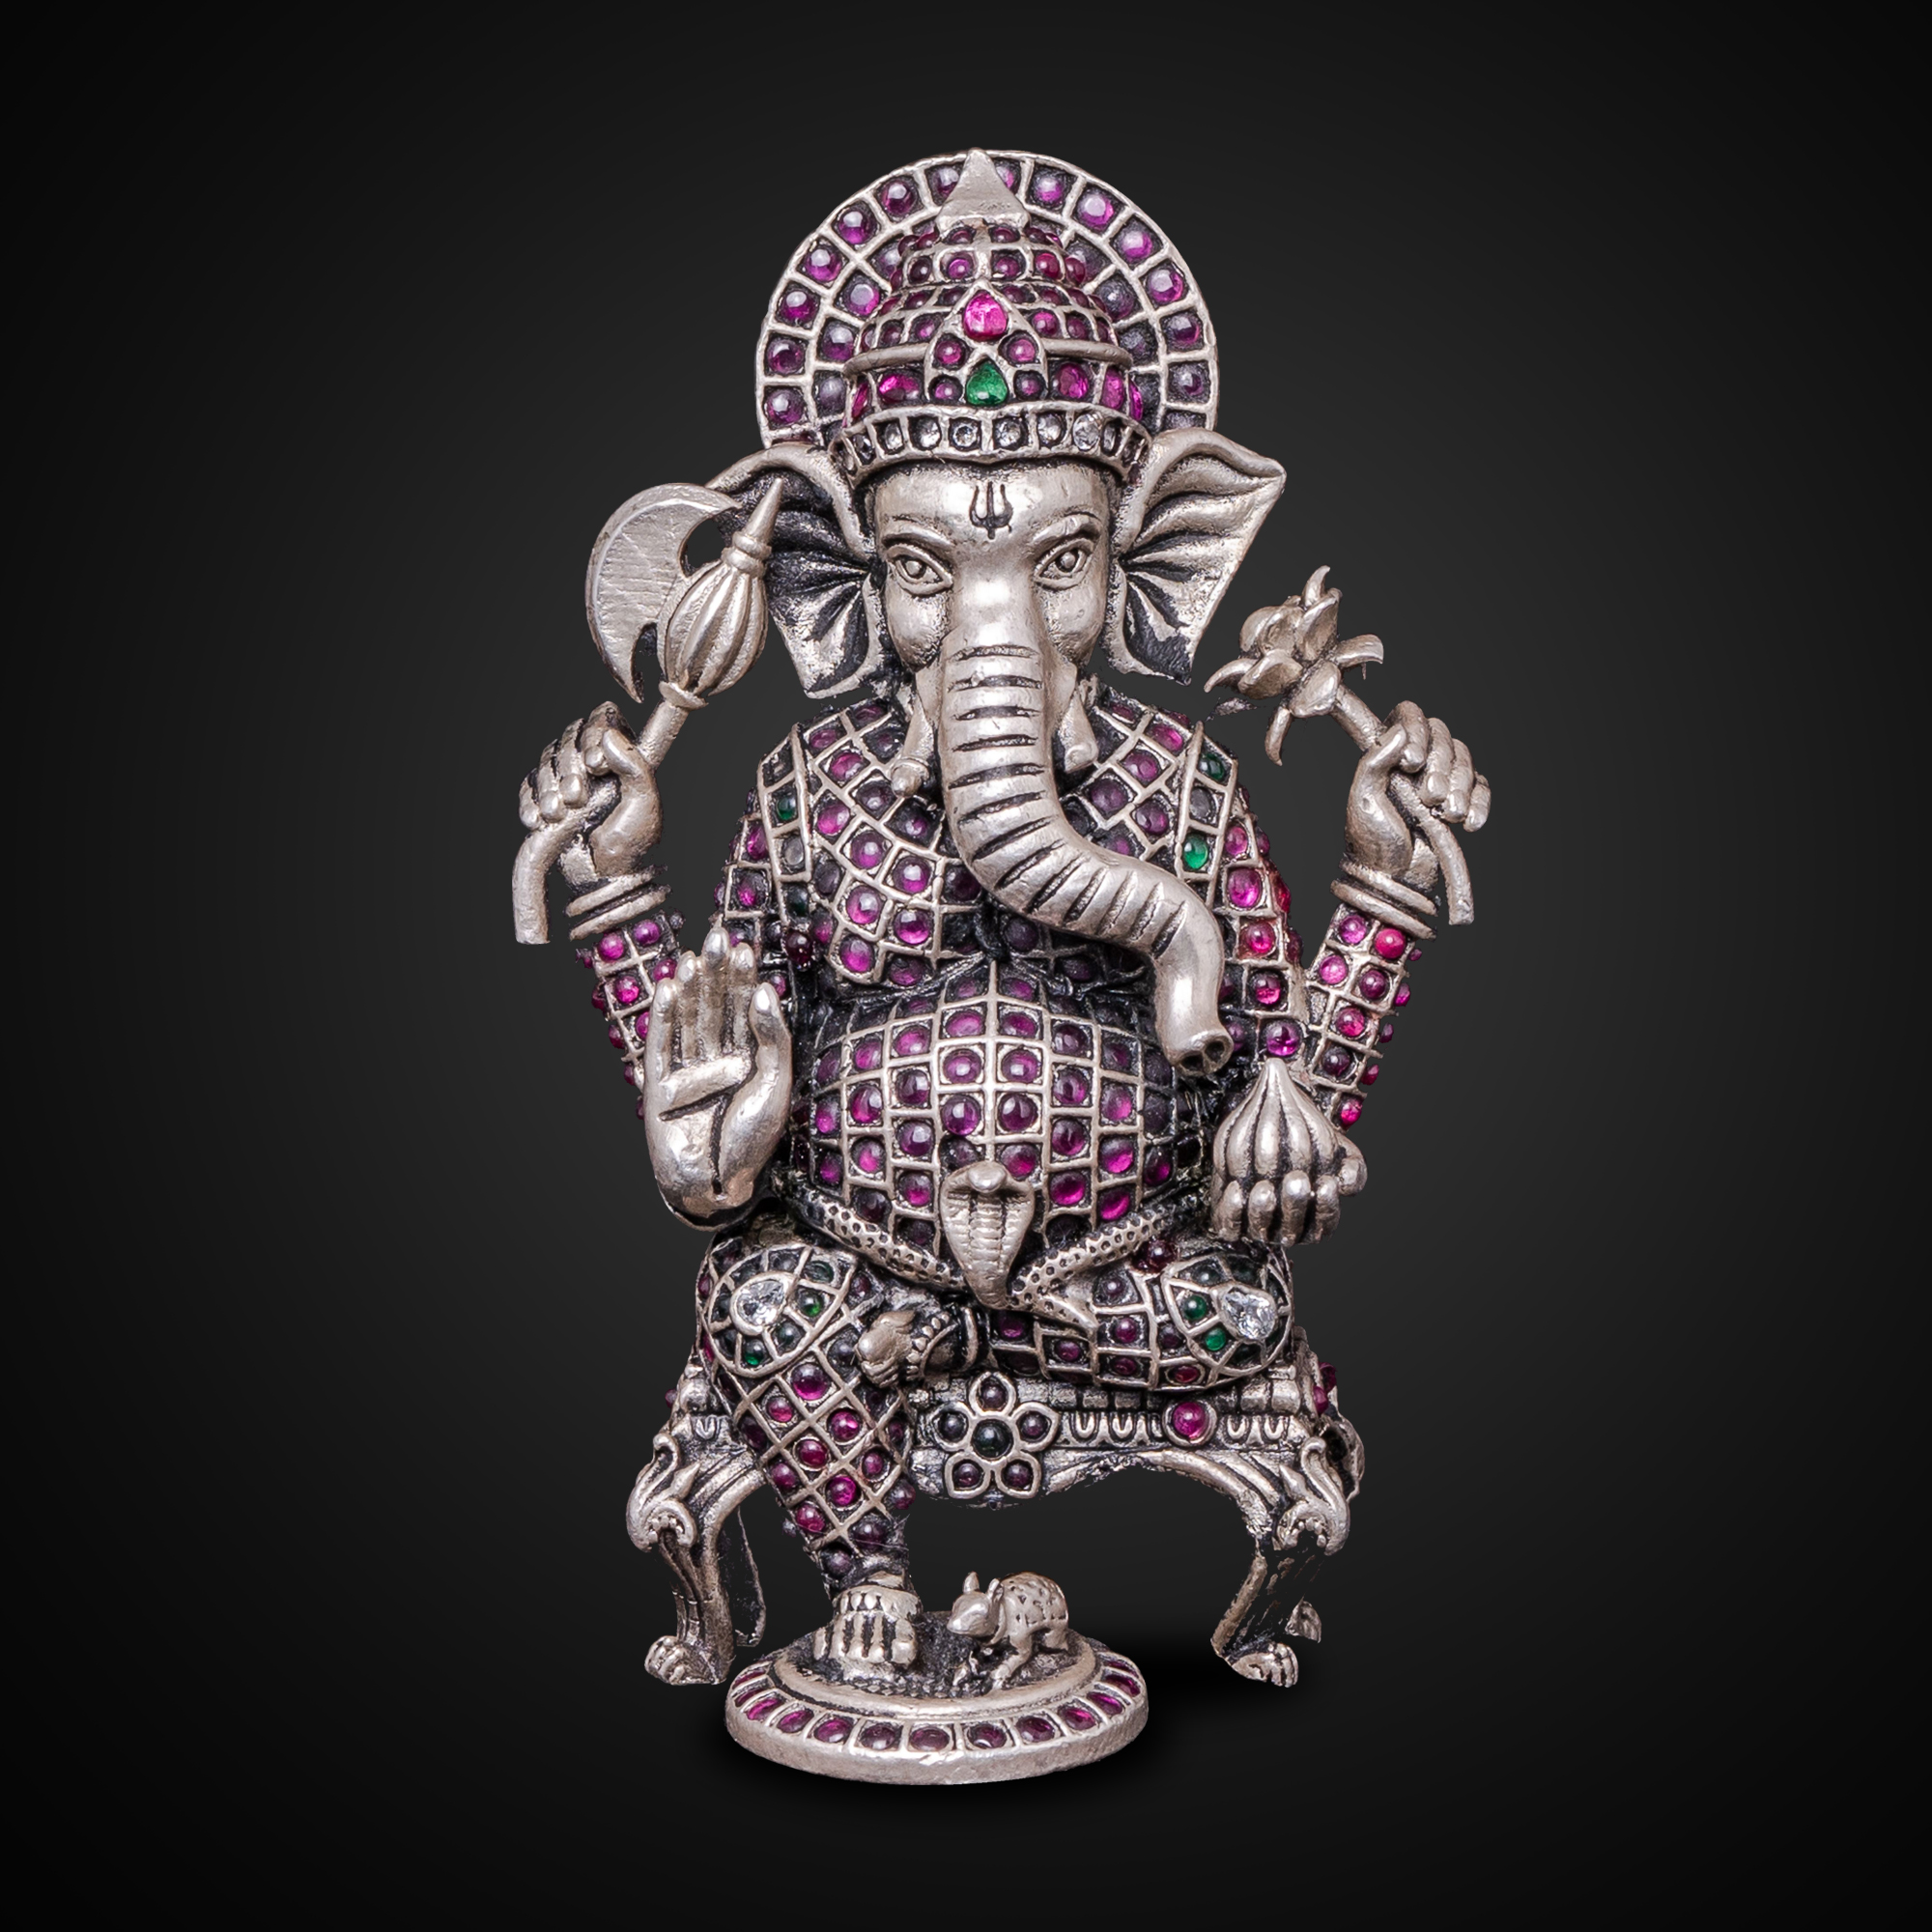 Ganesh Ji Idol